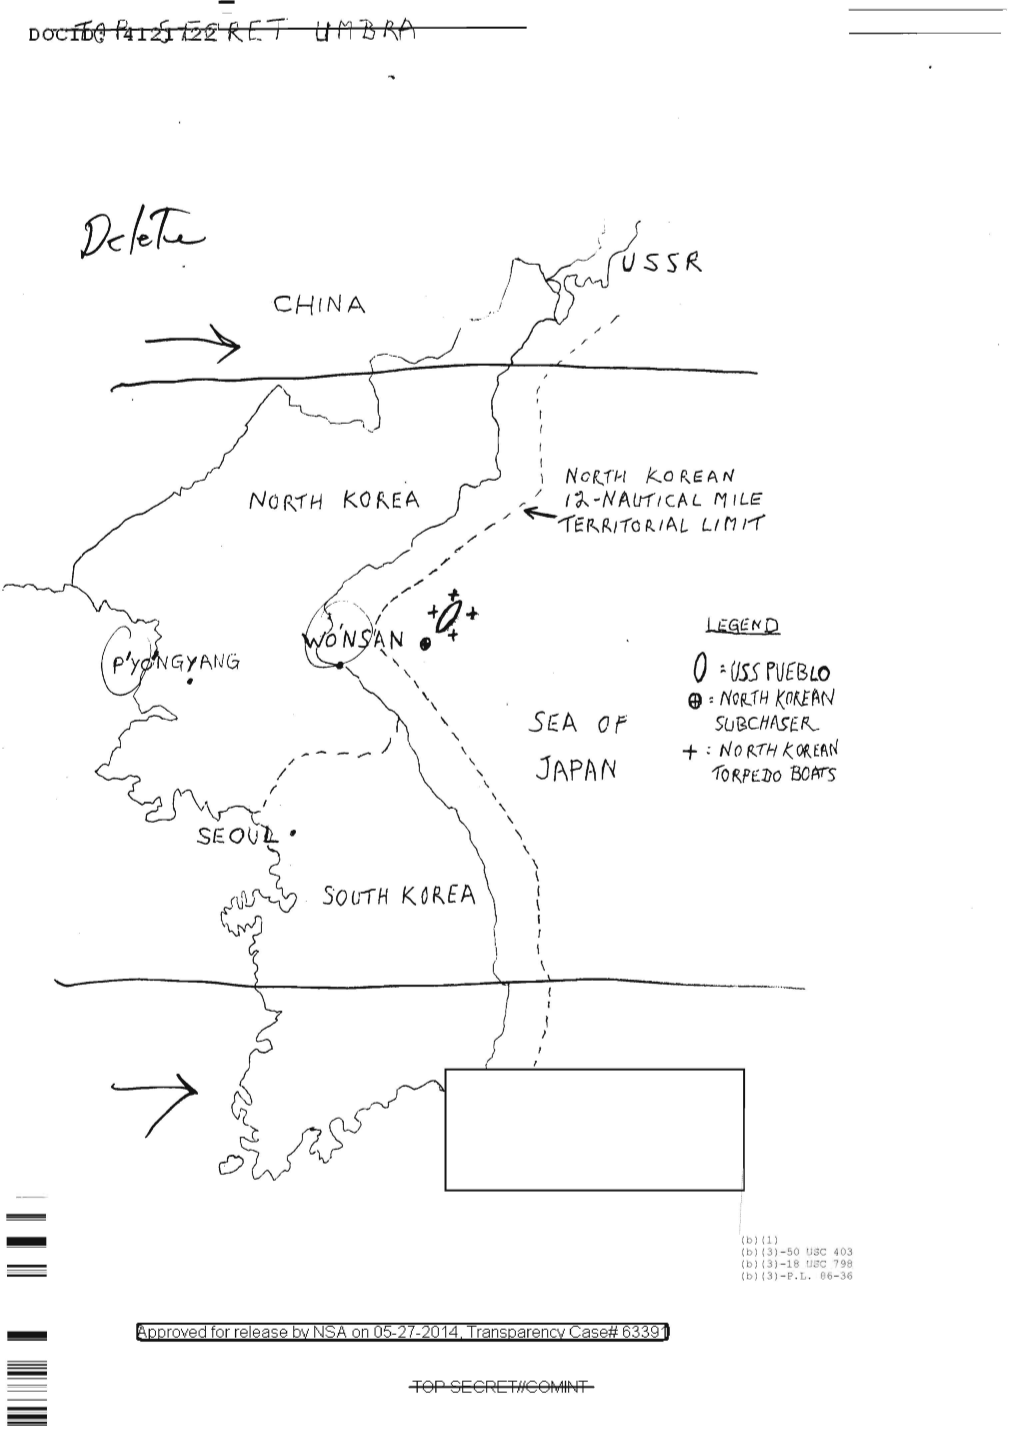  PUEBLO MISSION TRACK MAP (DOC ID 4121722).PDF